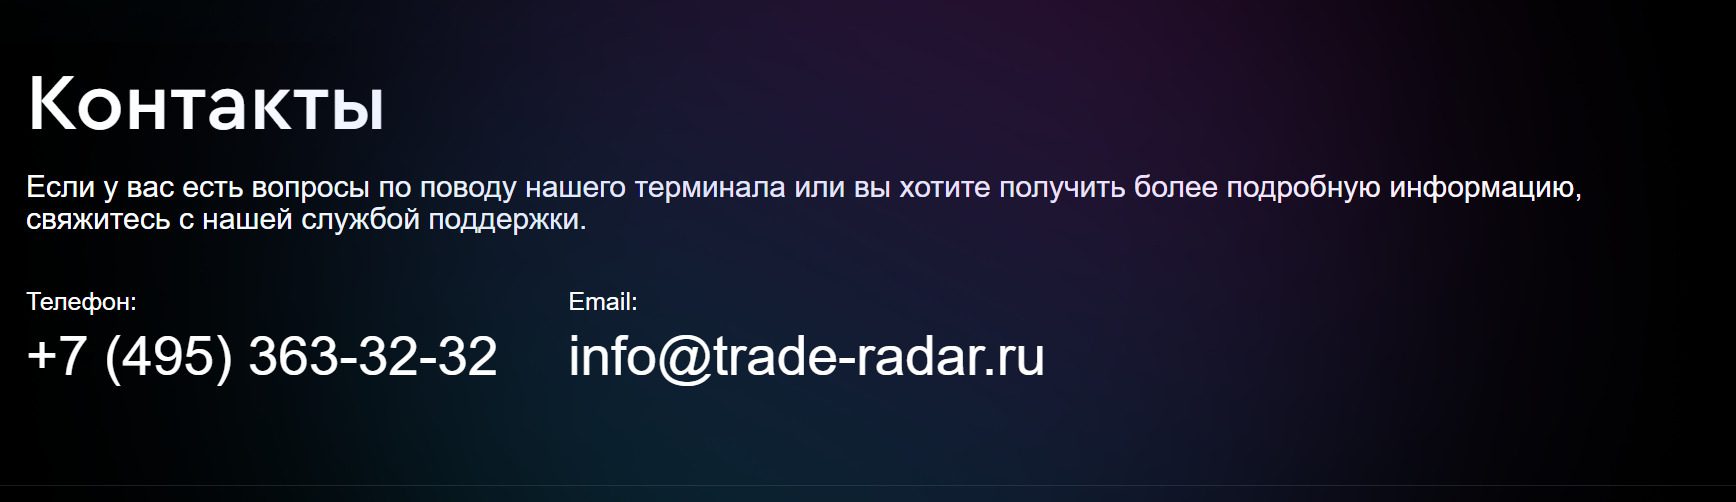 Контакты Traderadar
